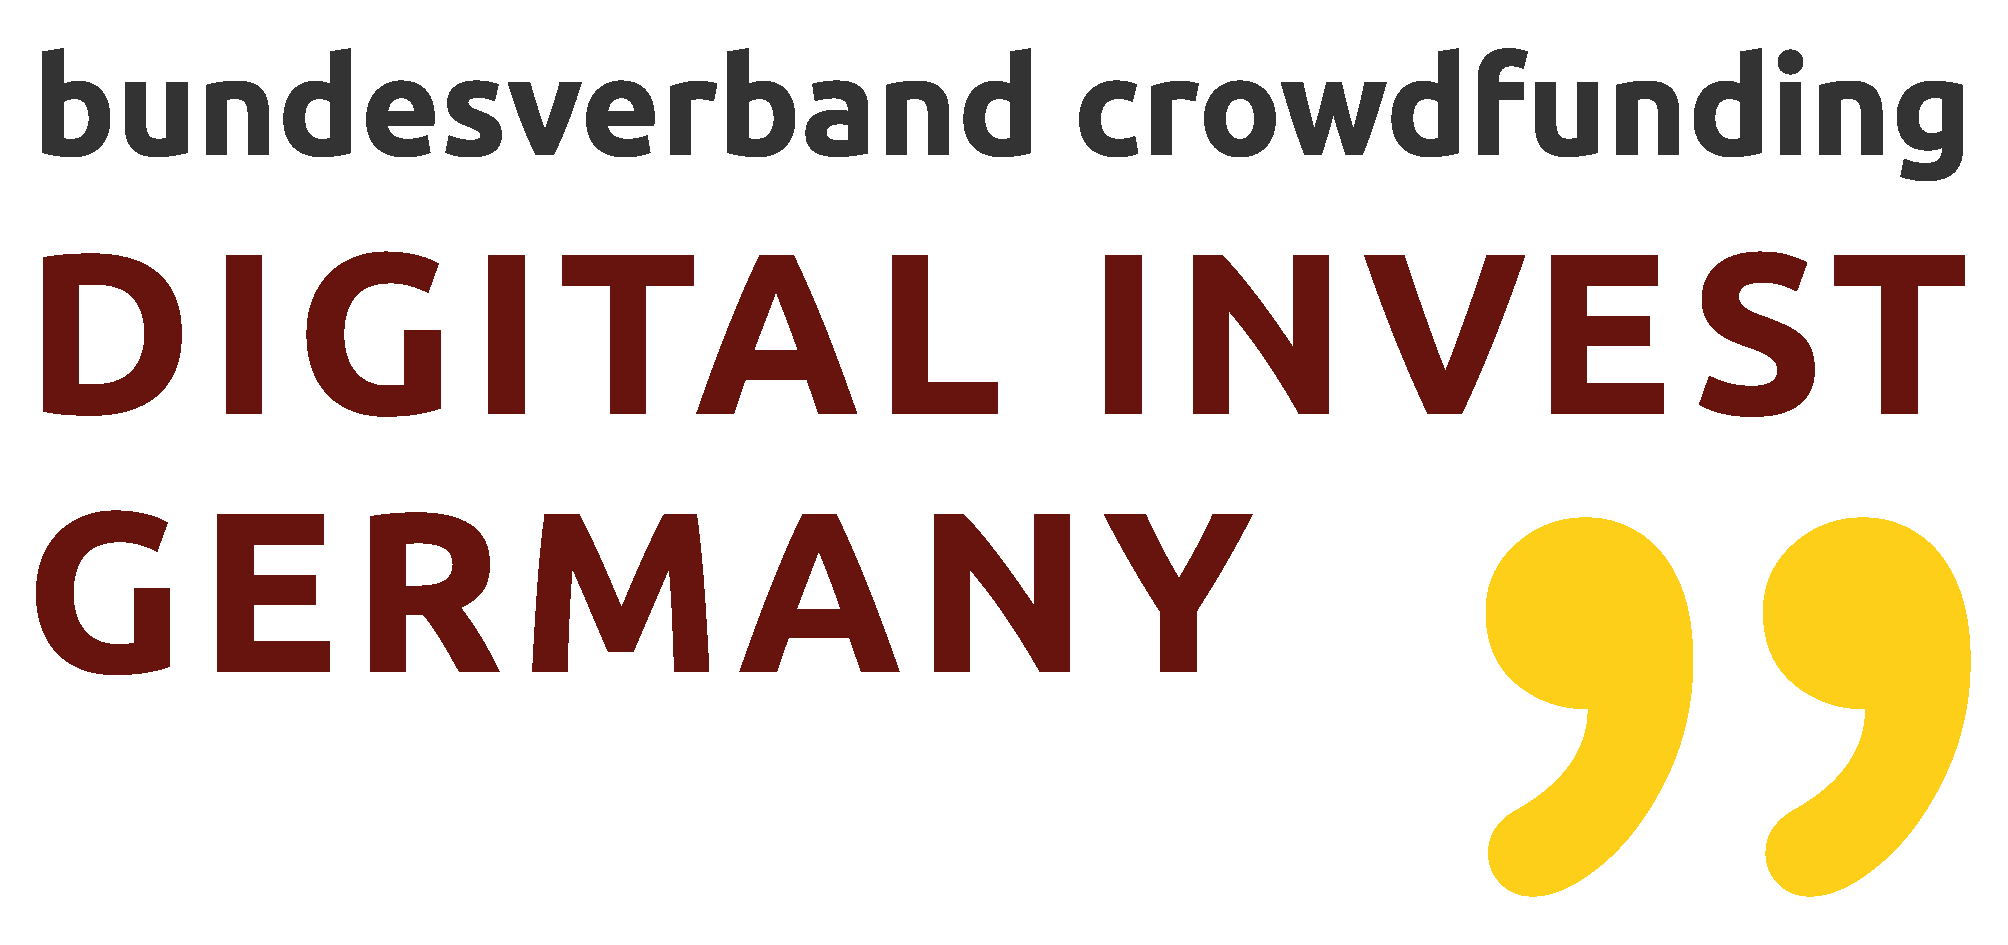 Digital Invest Germany